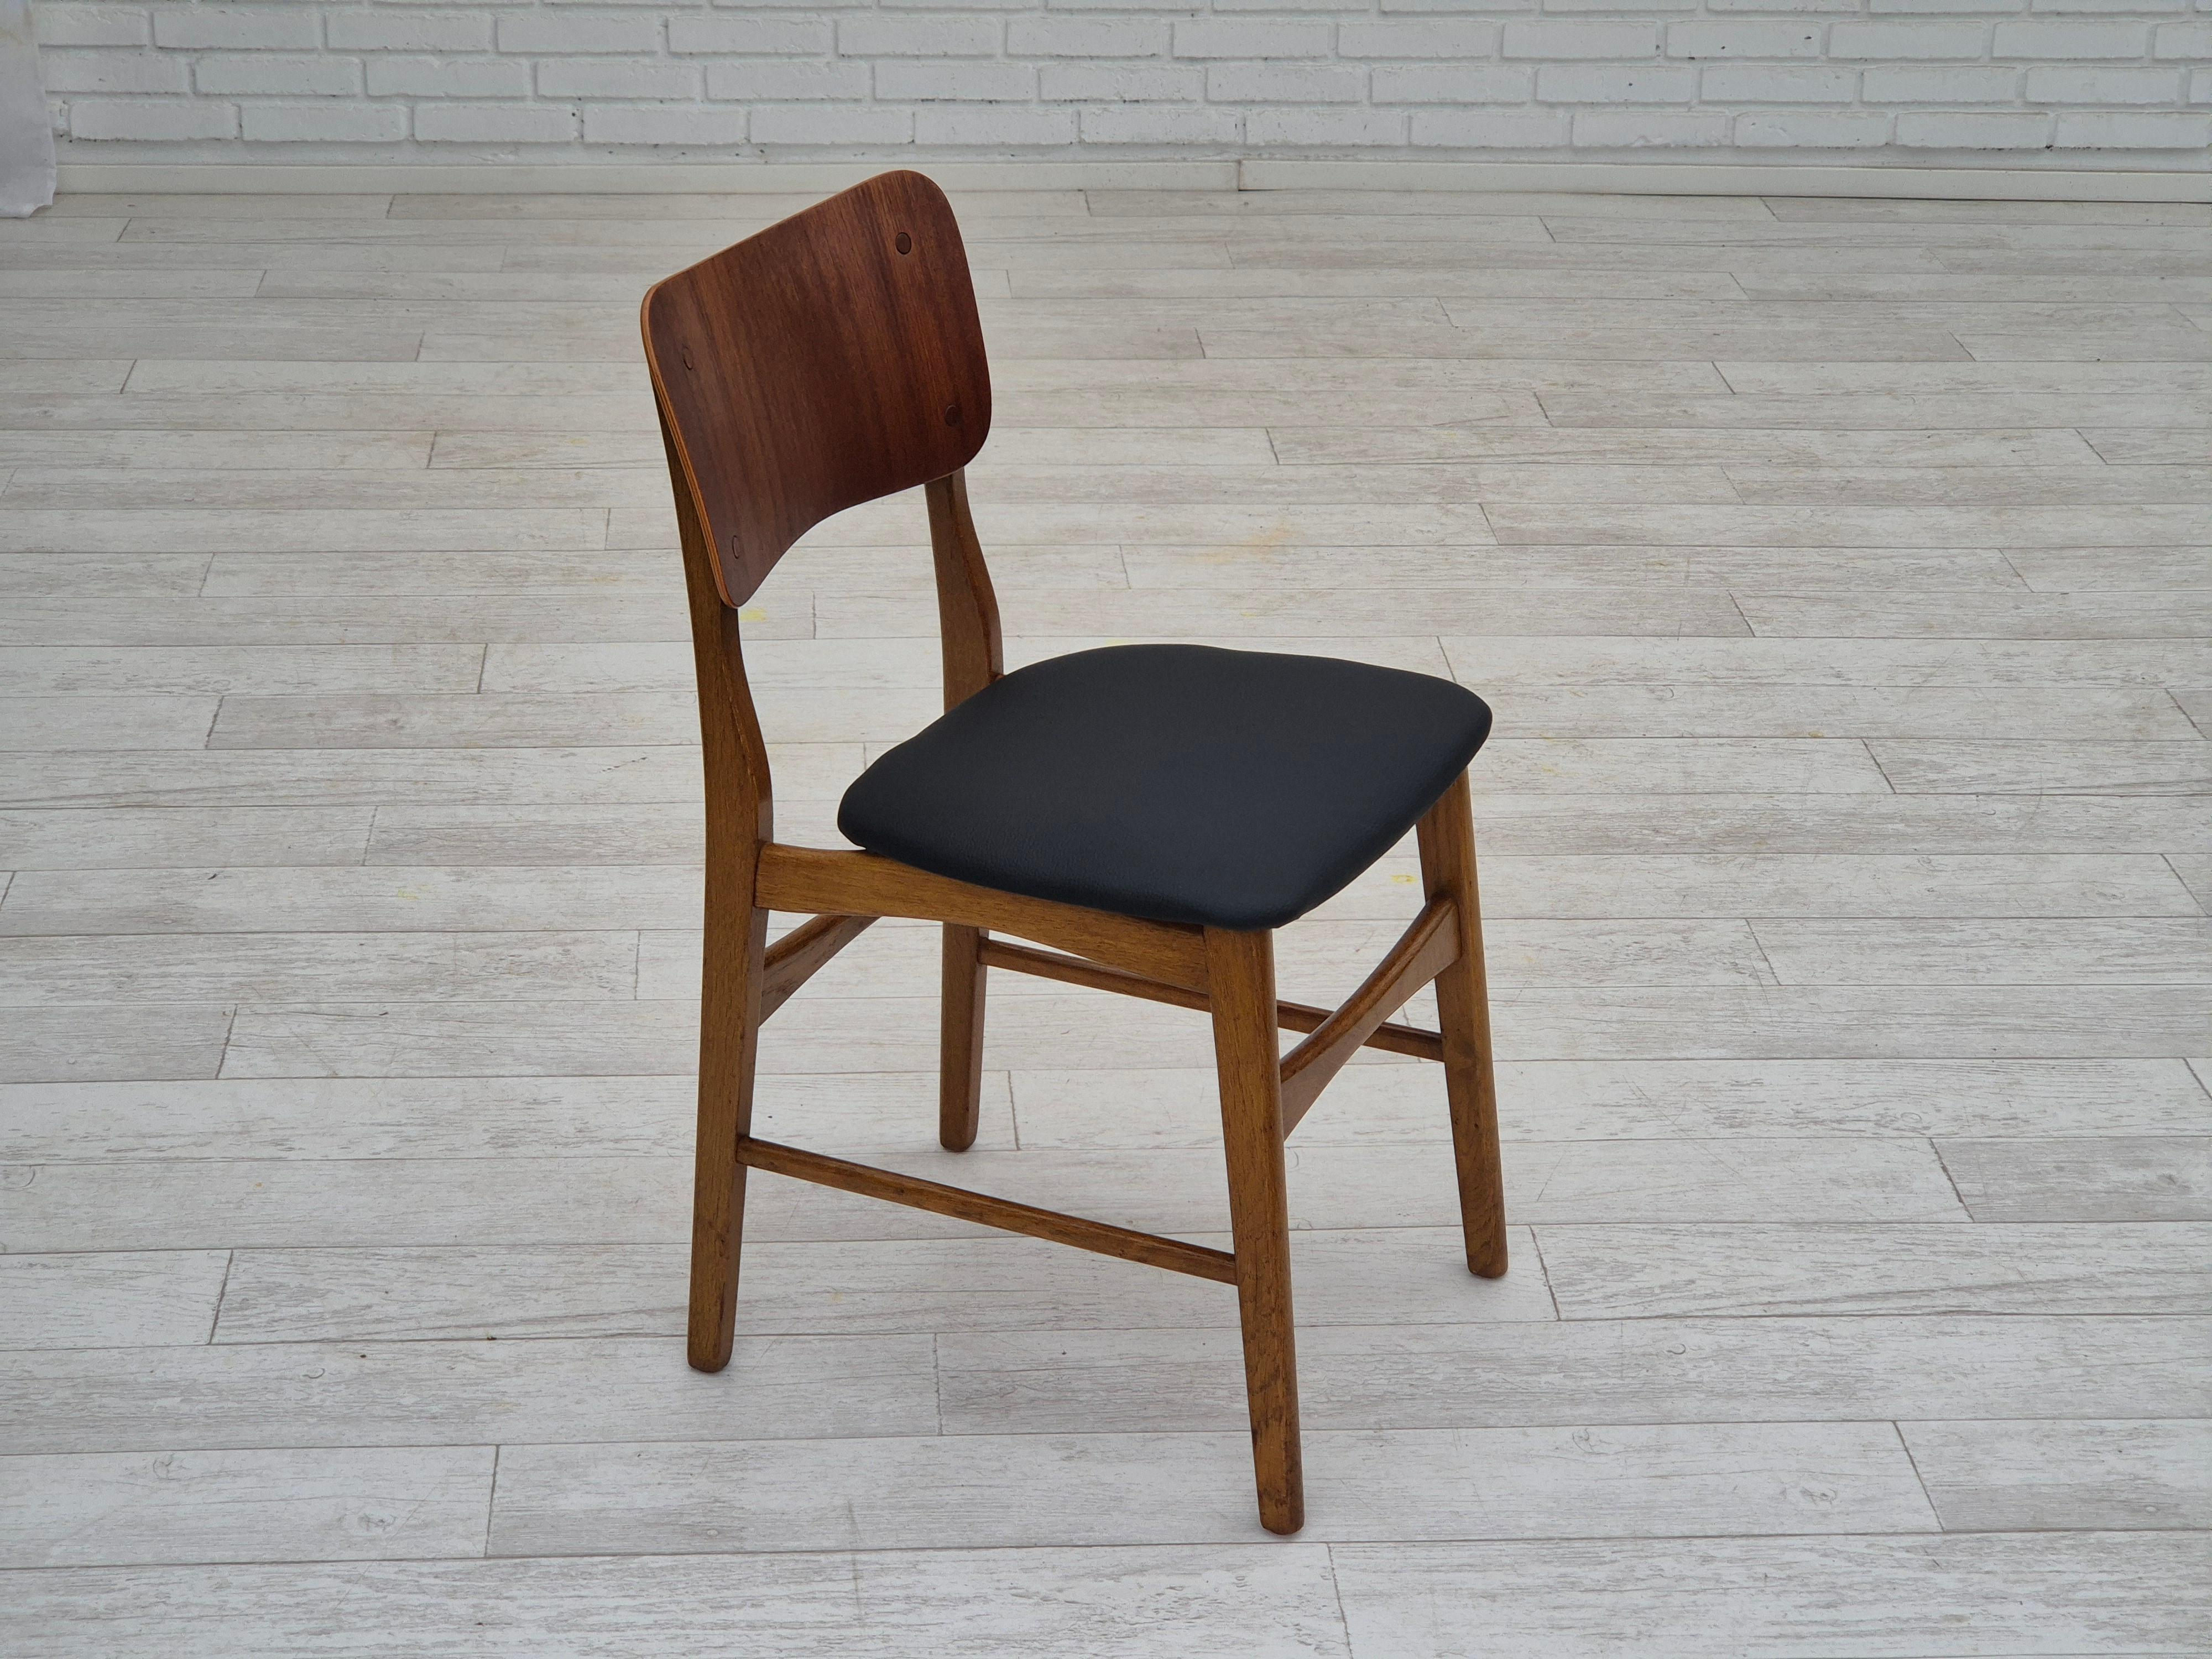 1960s, Danish design by Ib Kofod Larsen, Christensen & Larsen, set of chairs. 1